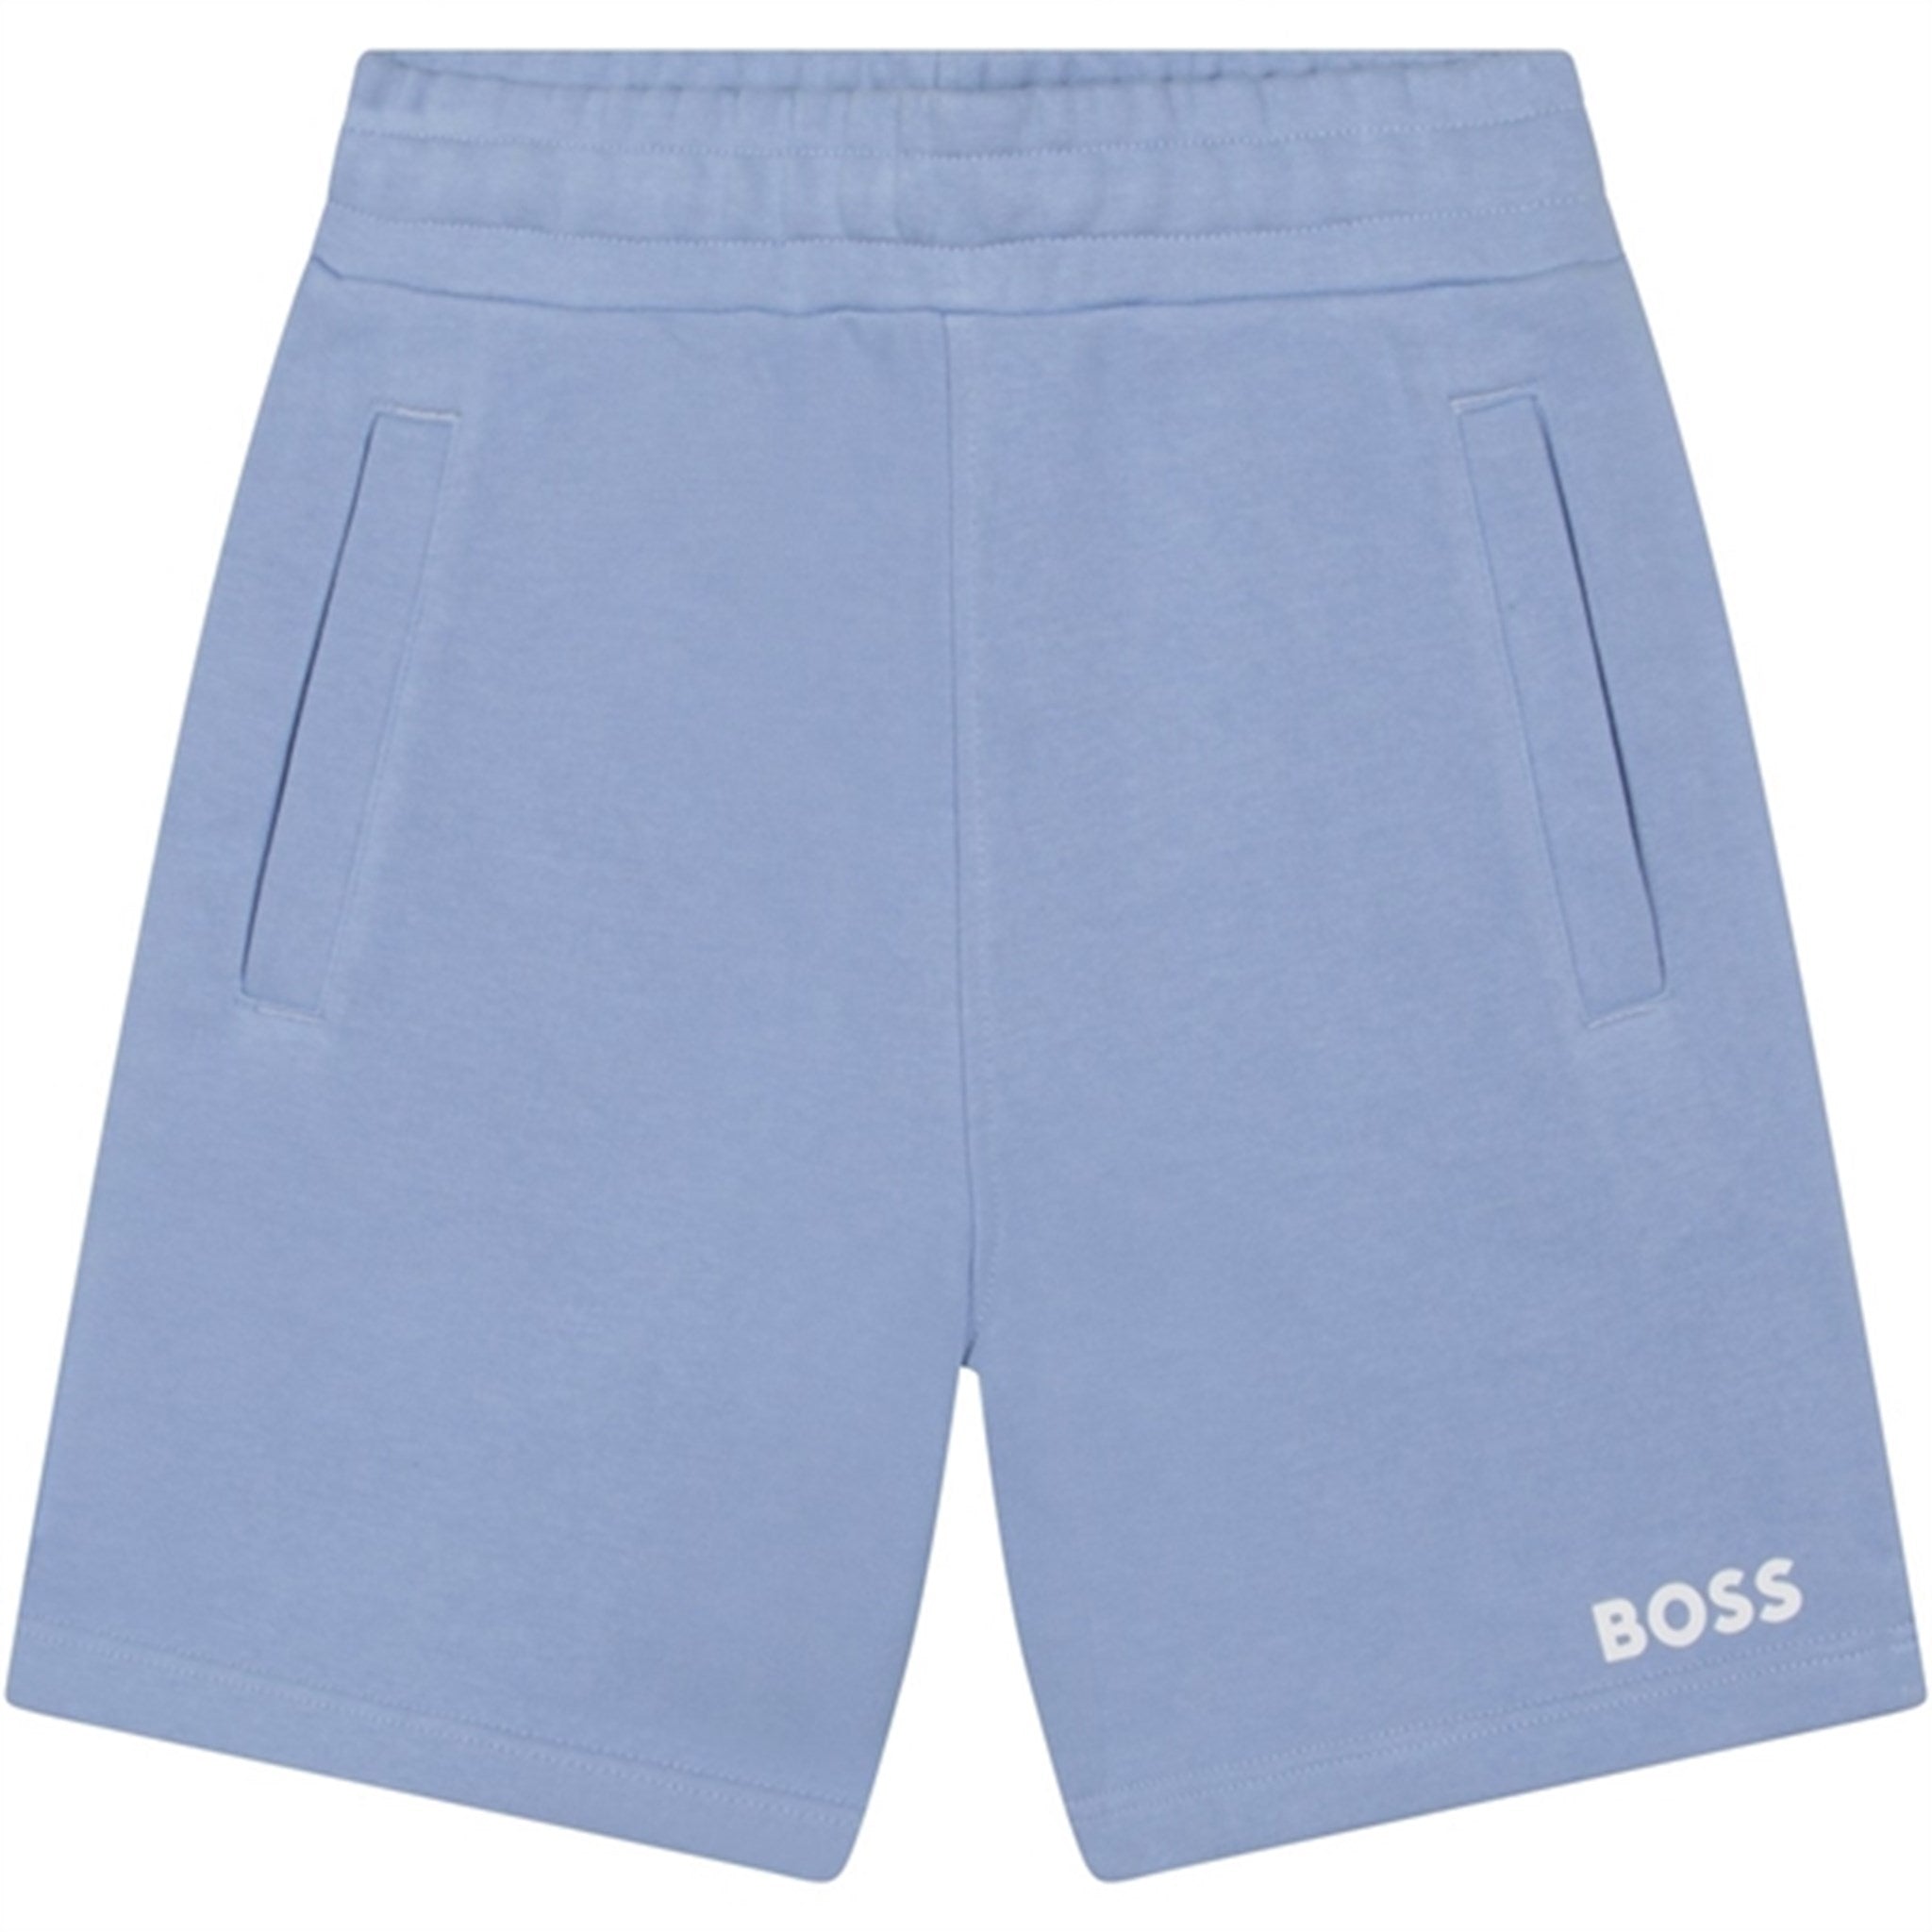 Hugo Boss Bermuda Shorts Pale Blue